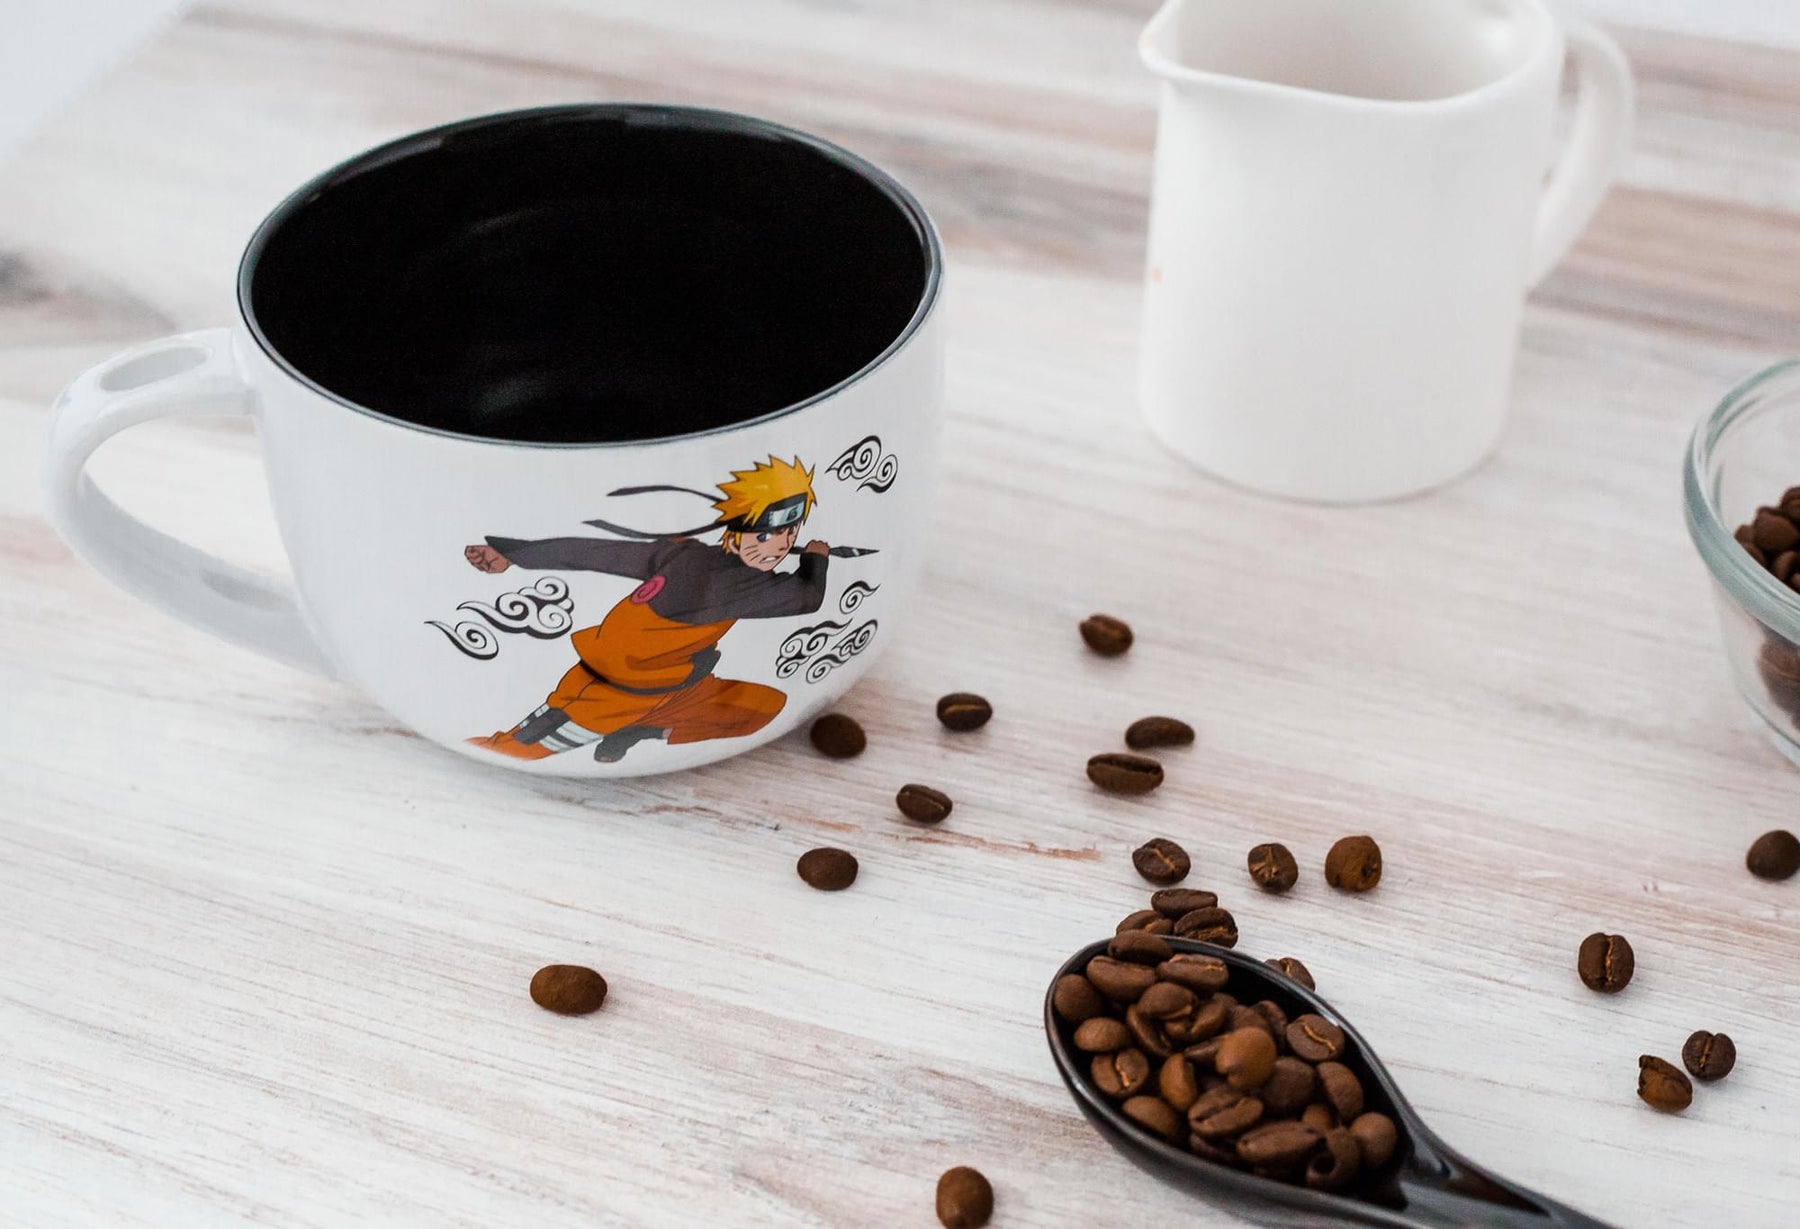 Naruto Anime Ceramic Ramen Soup Mug with Spoon - Awesome 20 oz Coffee